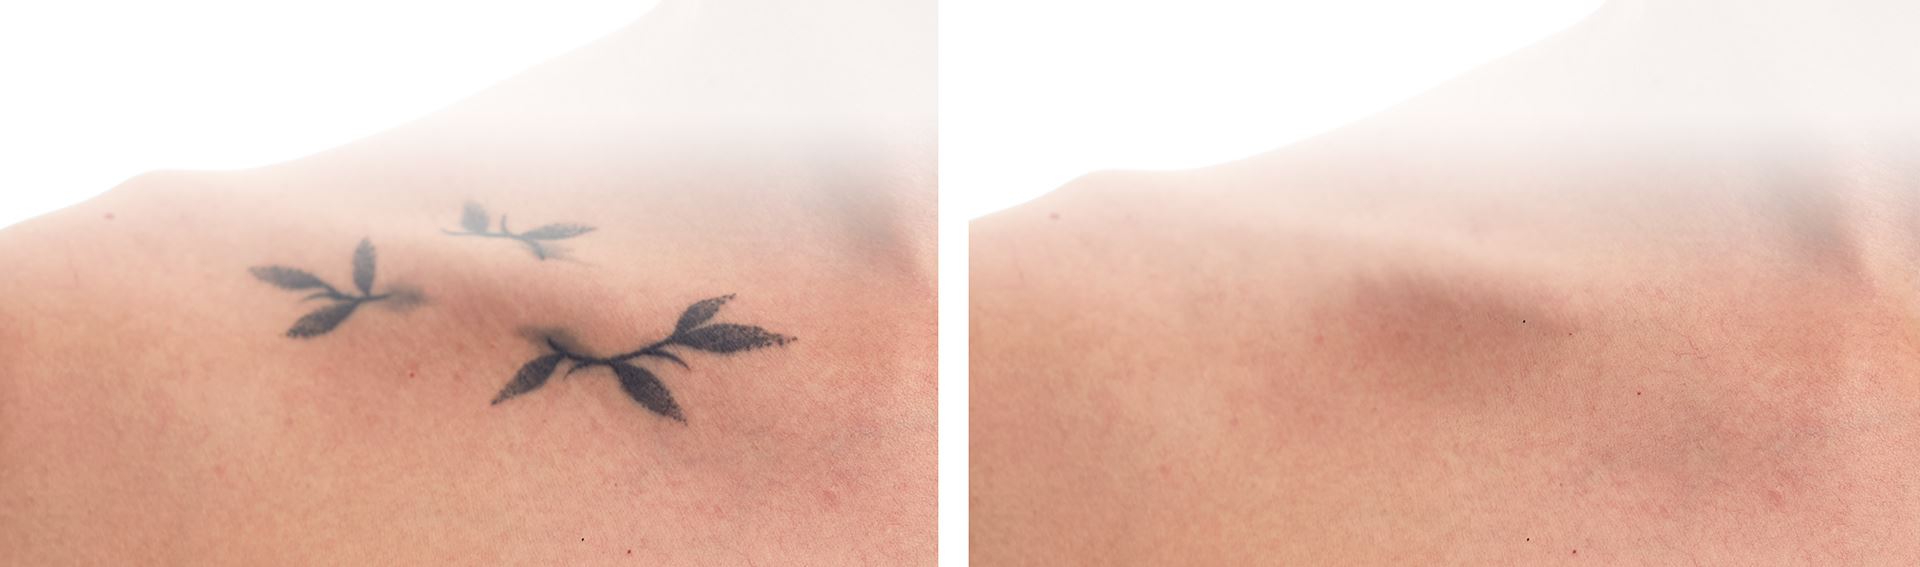 Laser Tattoo Removal in Boston, MA & Providence, RI - Skinsational